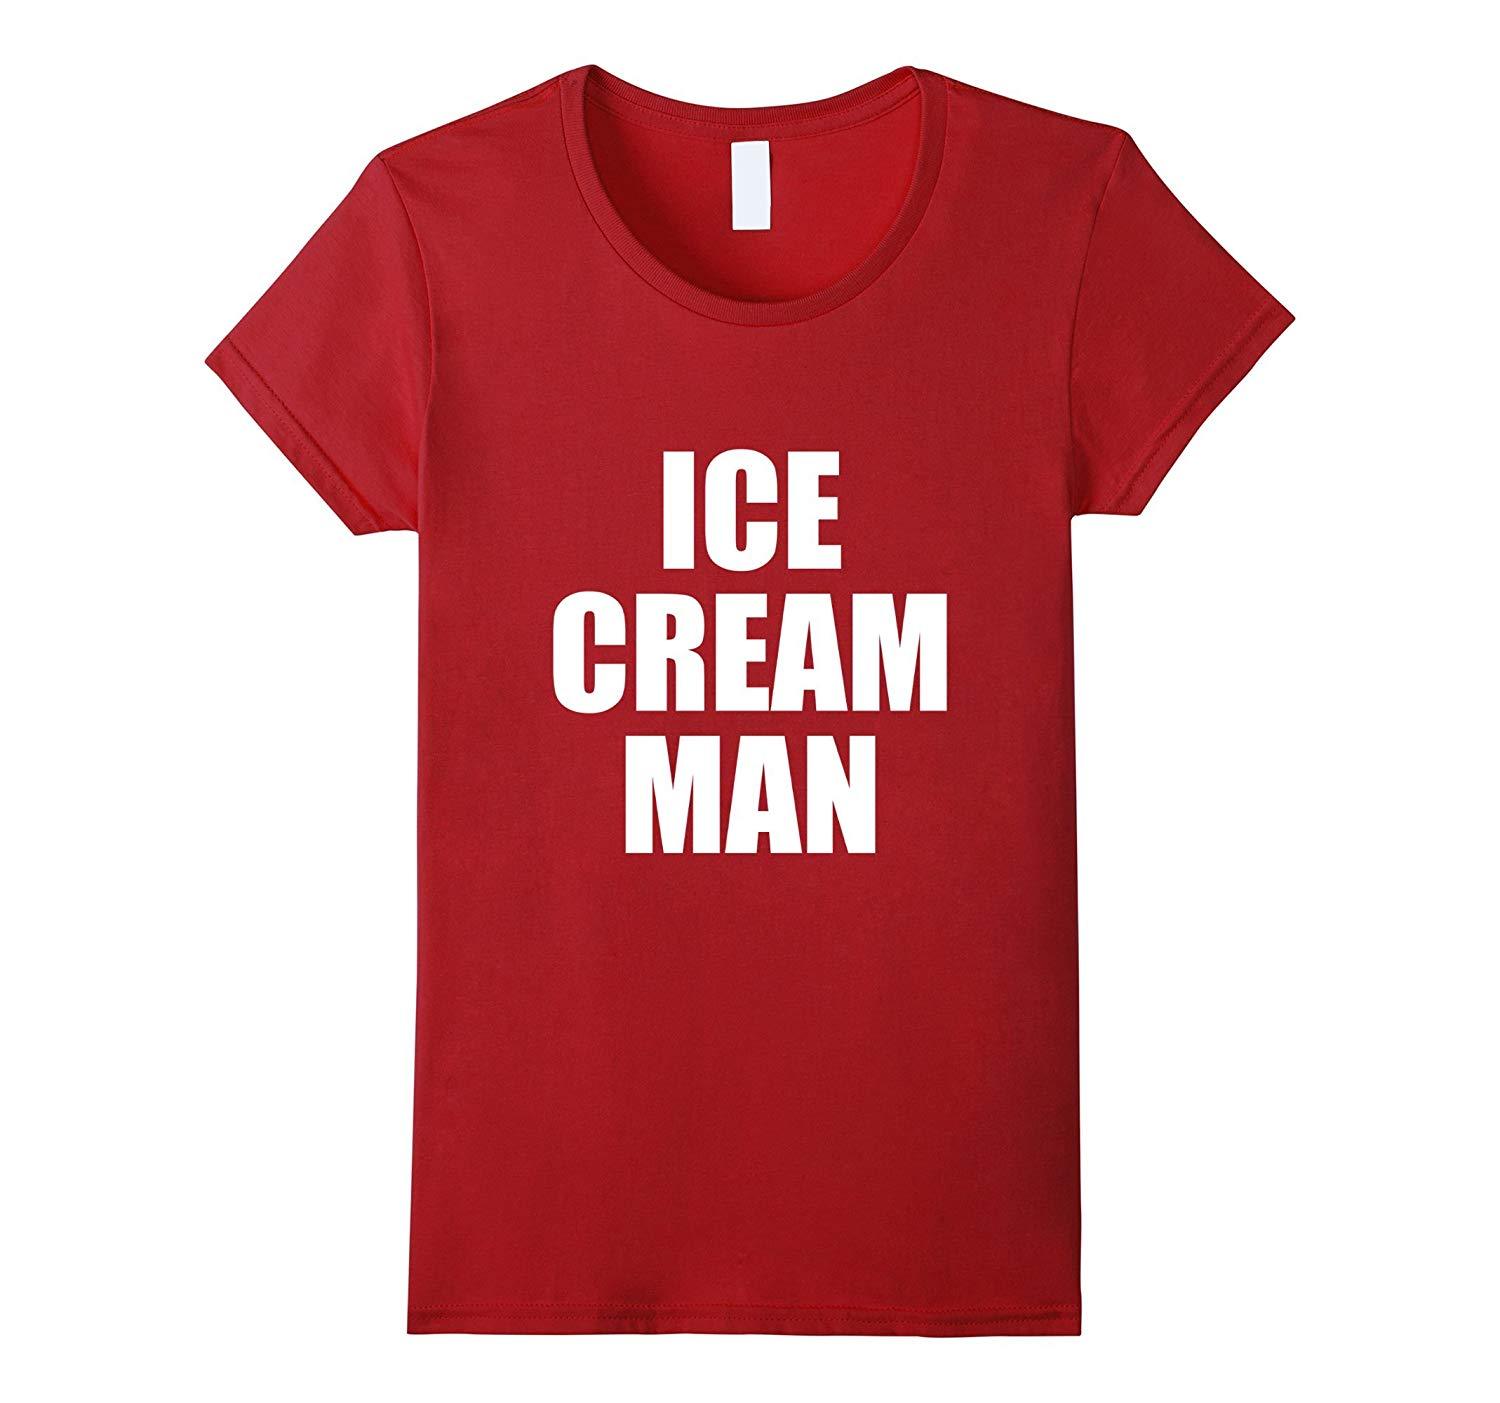 New Shirts - Ice cream man tshirt Wowen - Tops